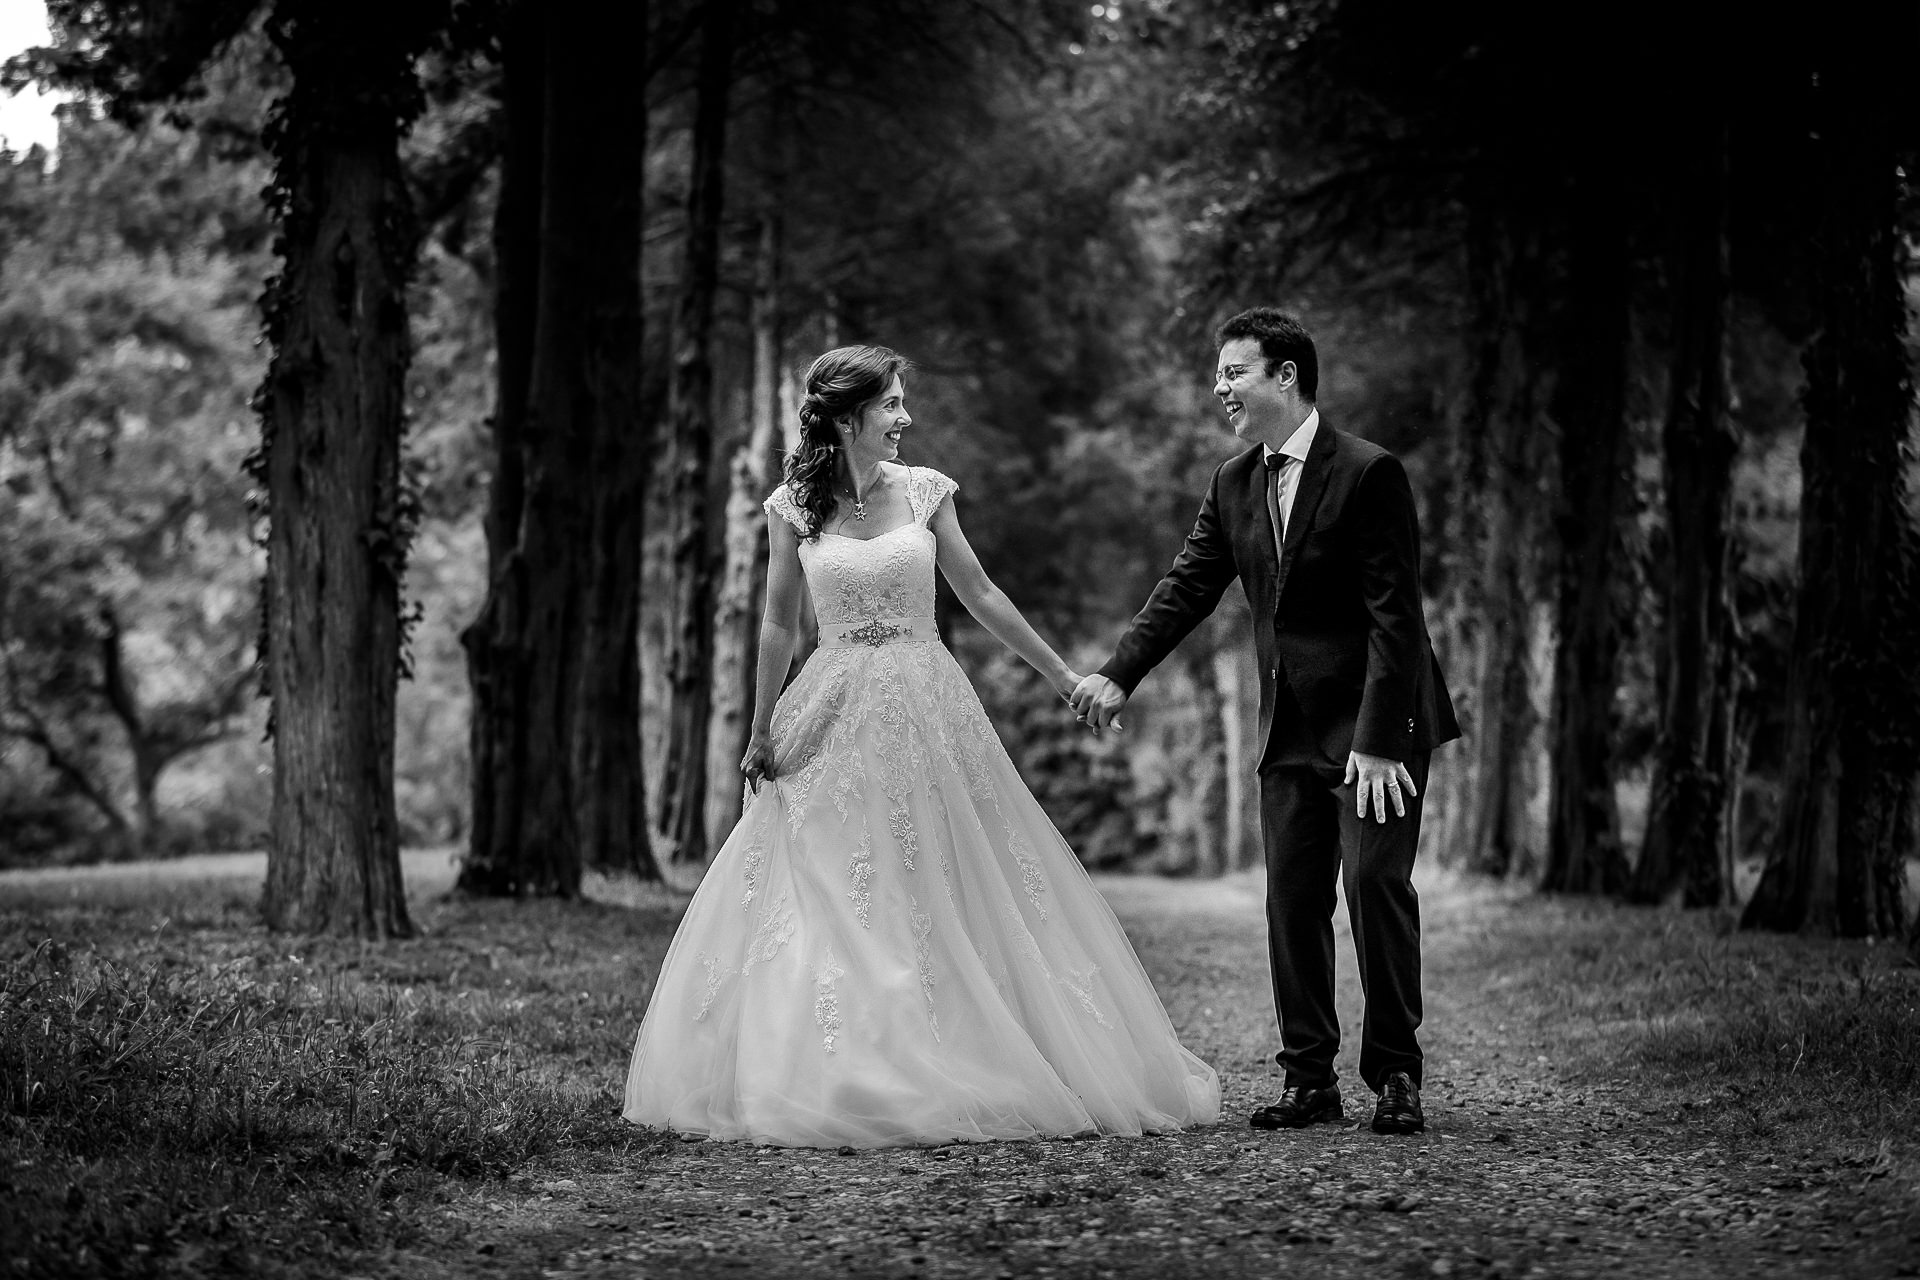 After Wedding Session - Buftea, Romania - Mihai Zaharia Photography - Destination Wedding Photographer